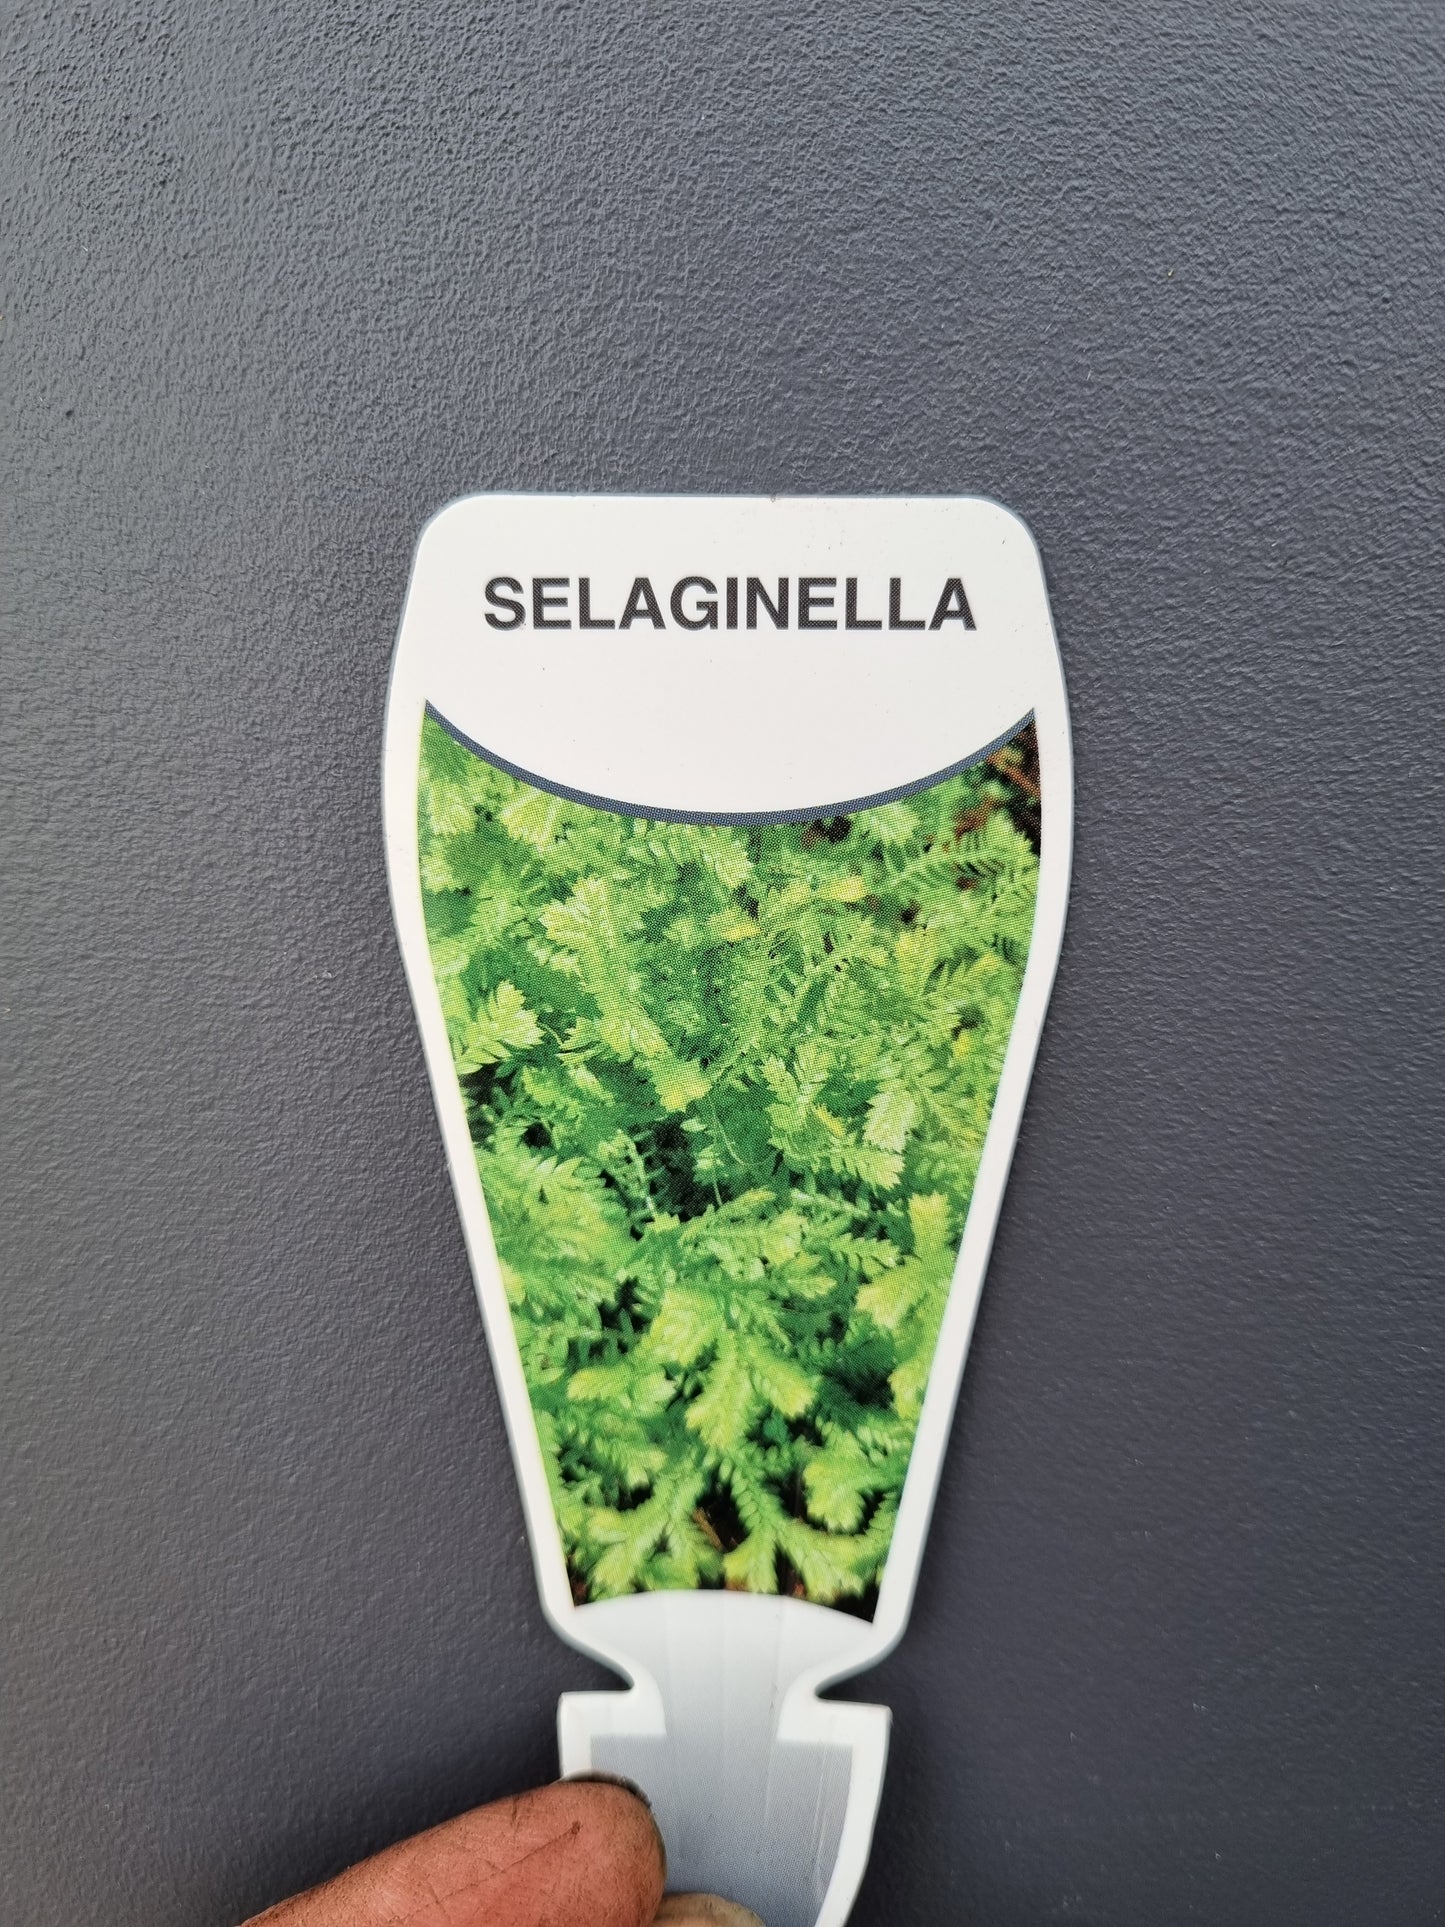 Selaginella- club moss